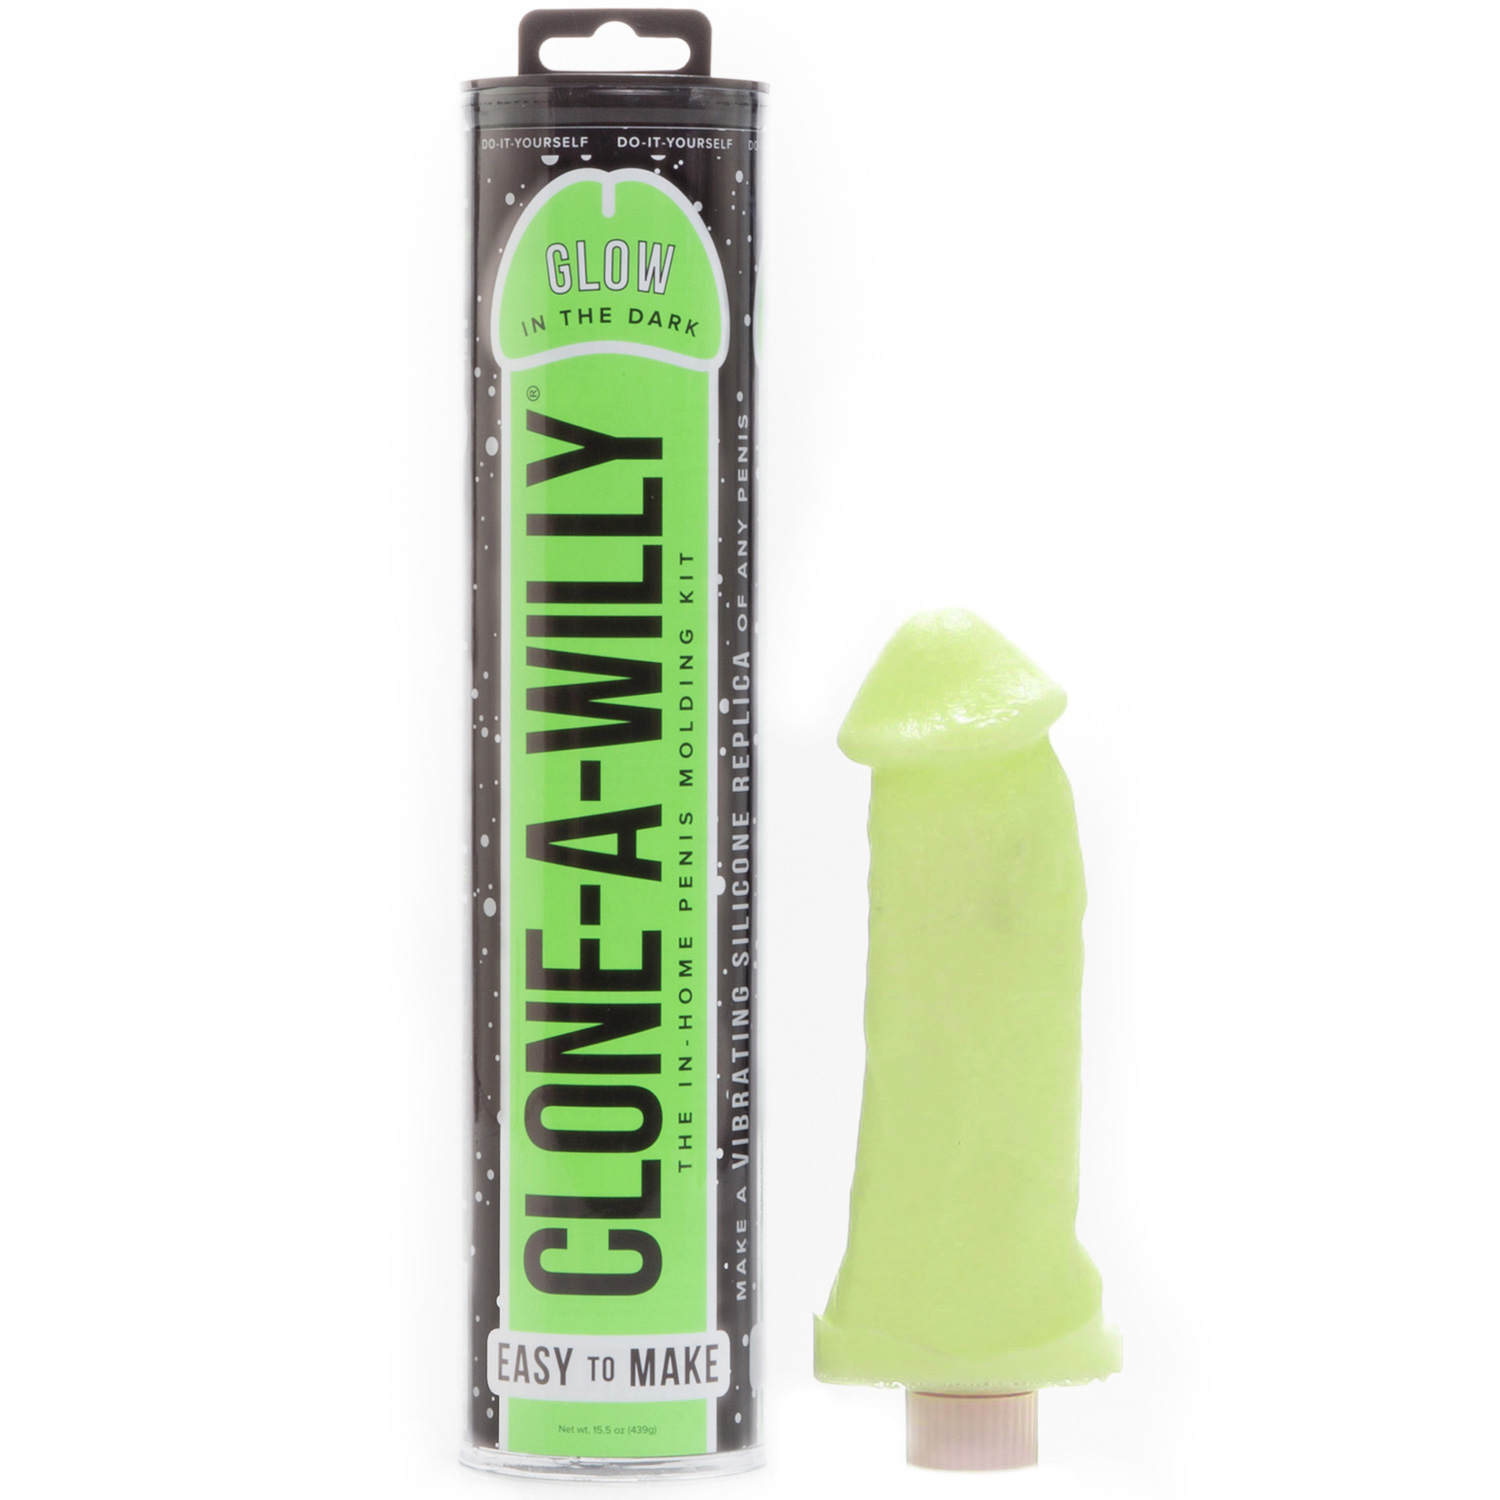 Clone-A-Willy DIY Homemade Dildo Clone Kit Glow In The Dark Green - Green